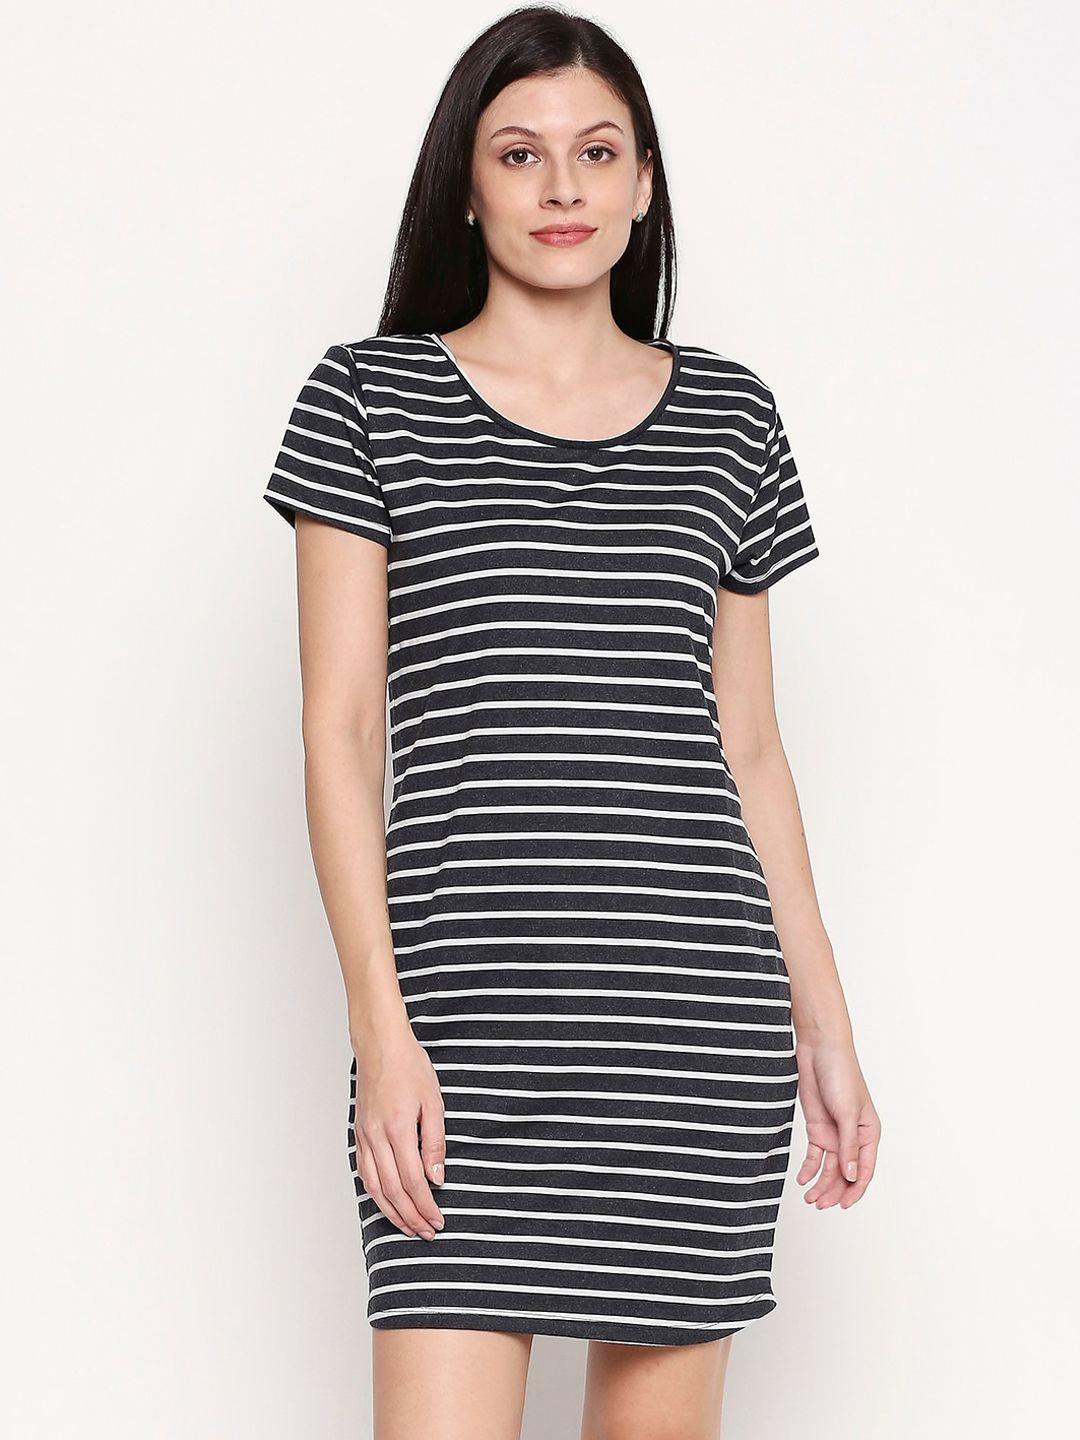 people-charcoal-grey-&-white-striped-t-shirt-dress